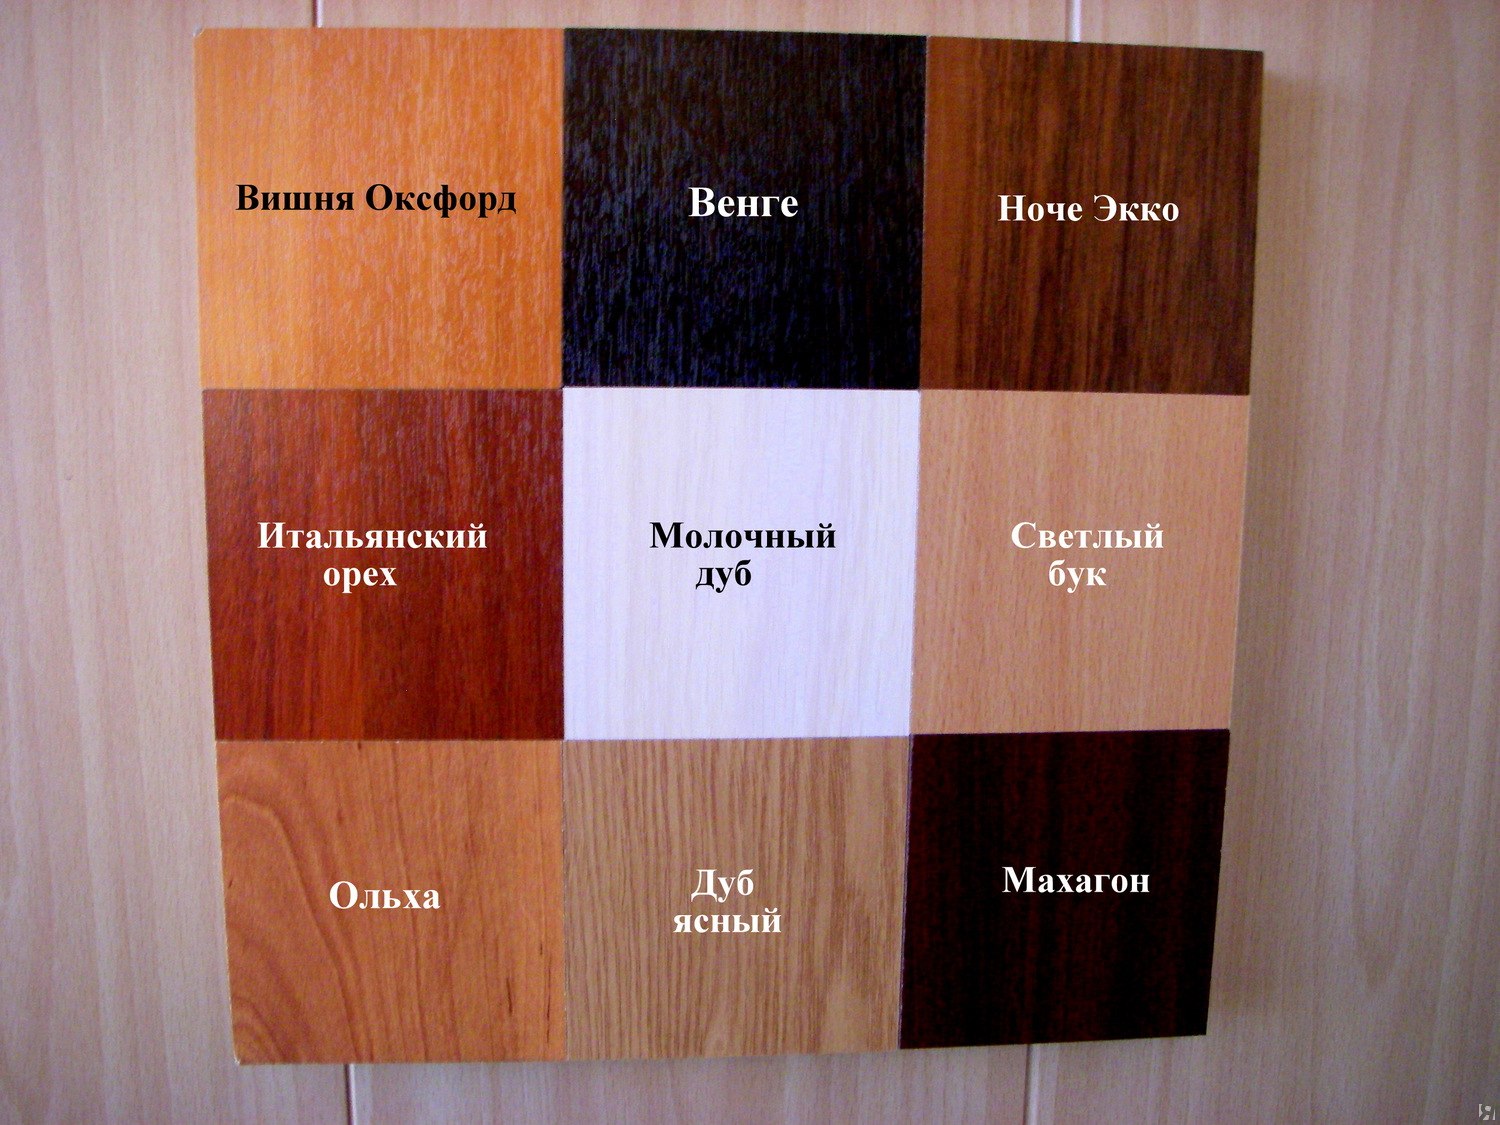 разновидности цвета орех мебель